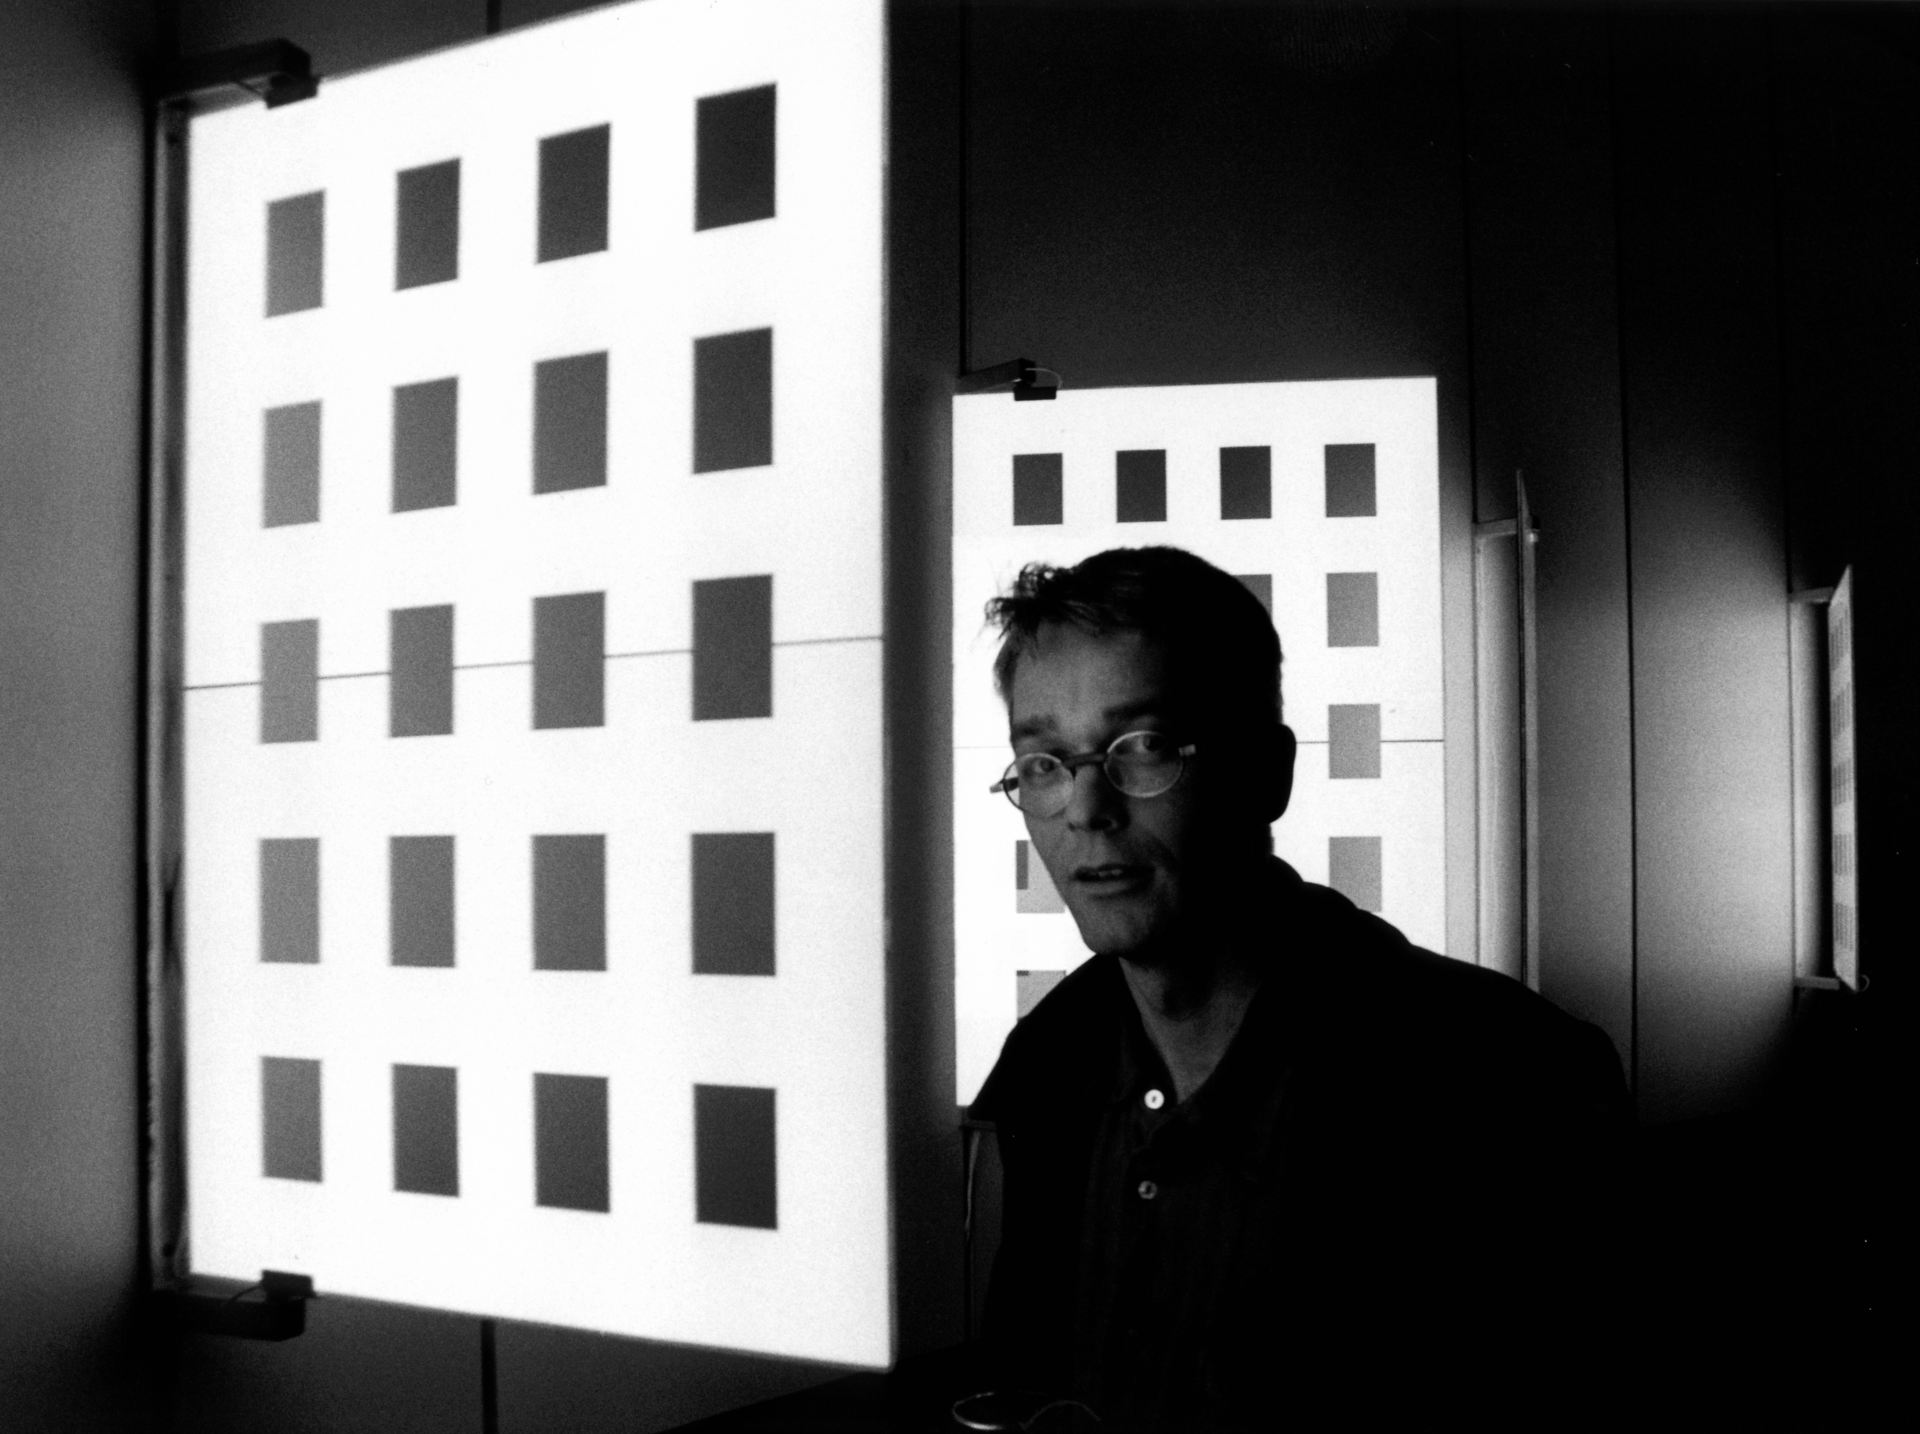 daniel_hausig_windows_farben_1996_light-art-installation